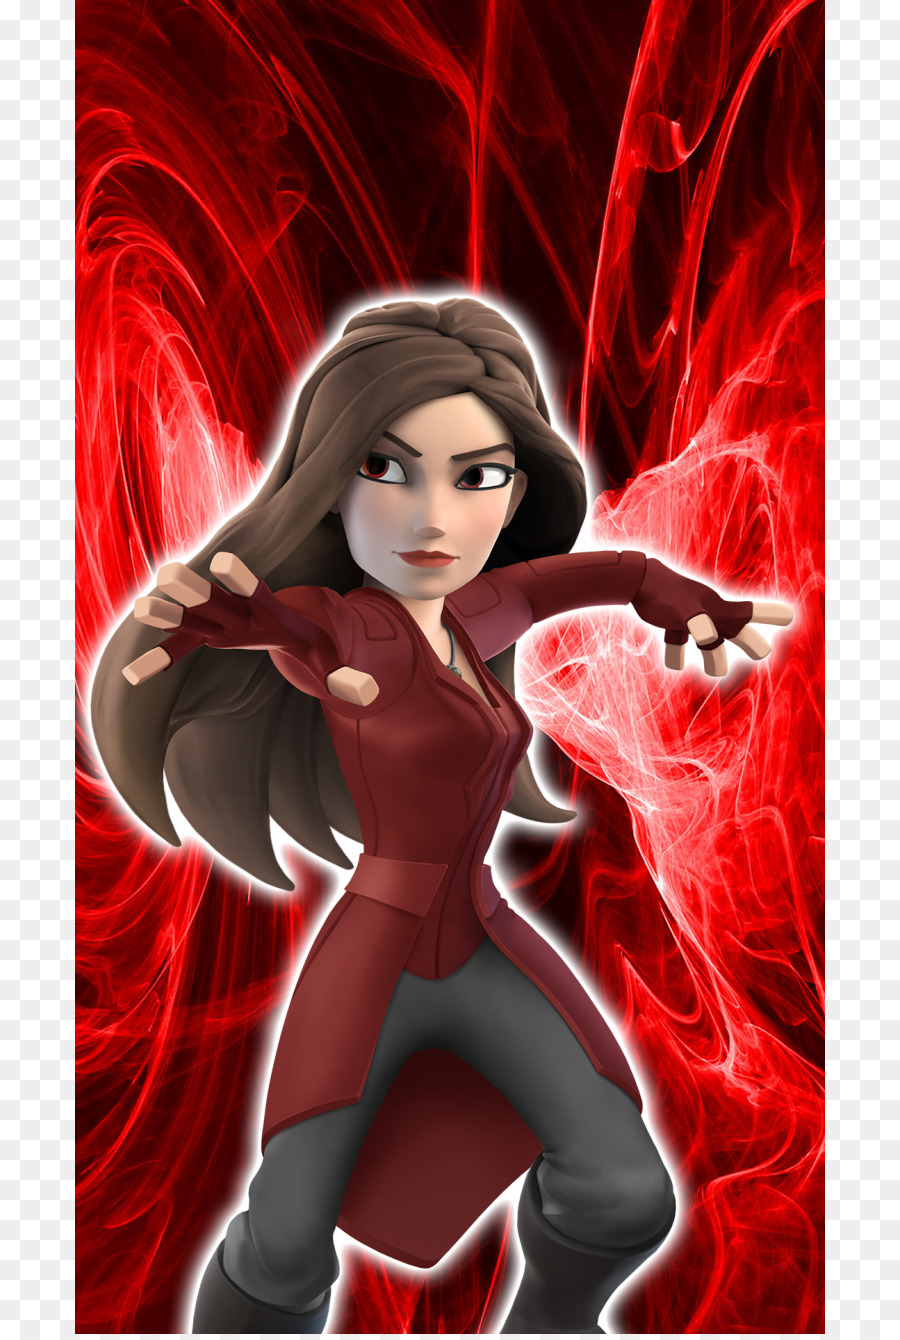 Elizabeth Olsen Disney Infinity 3.0 Disney Infinity: Marvel Super Heroes Wanda Maximoff Quicksilver - Scarlet Witch png download - 750*1334 - Free Transparent  png Download.